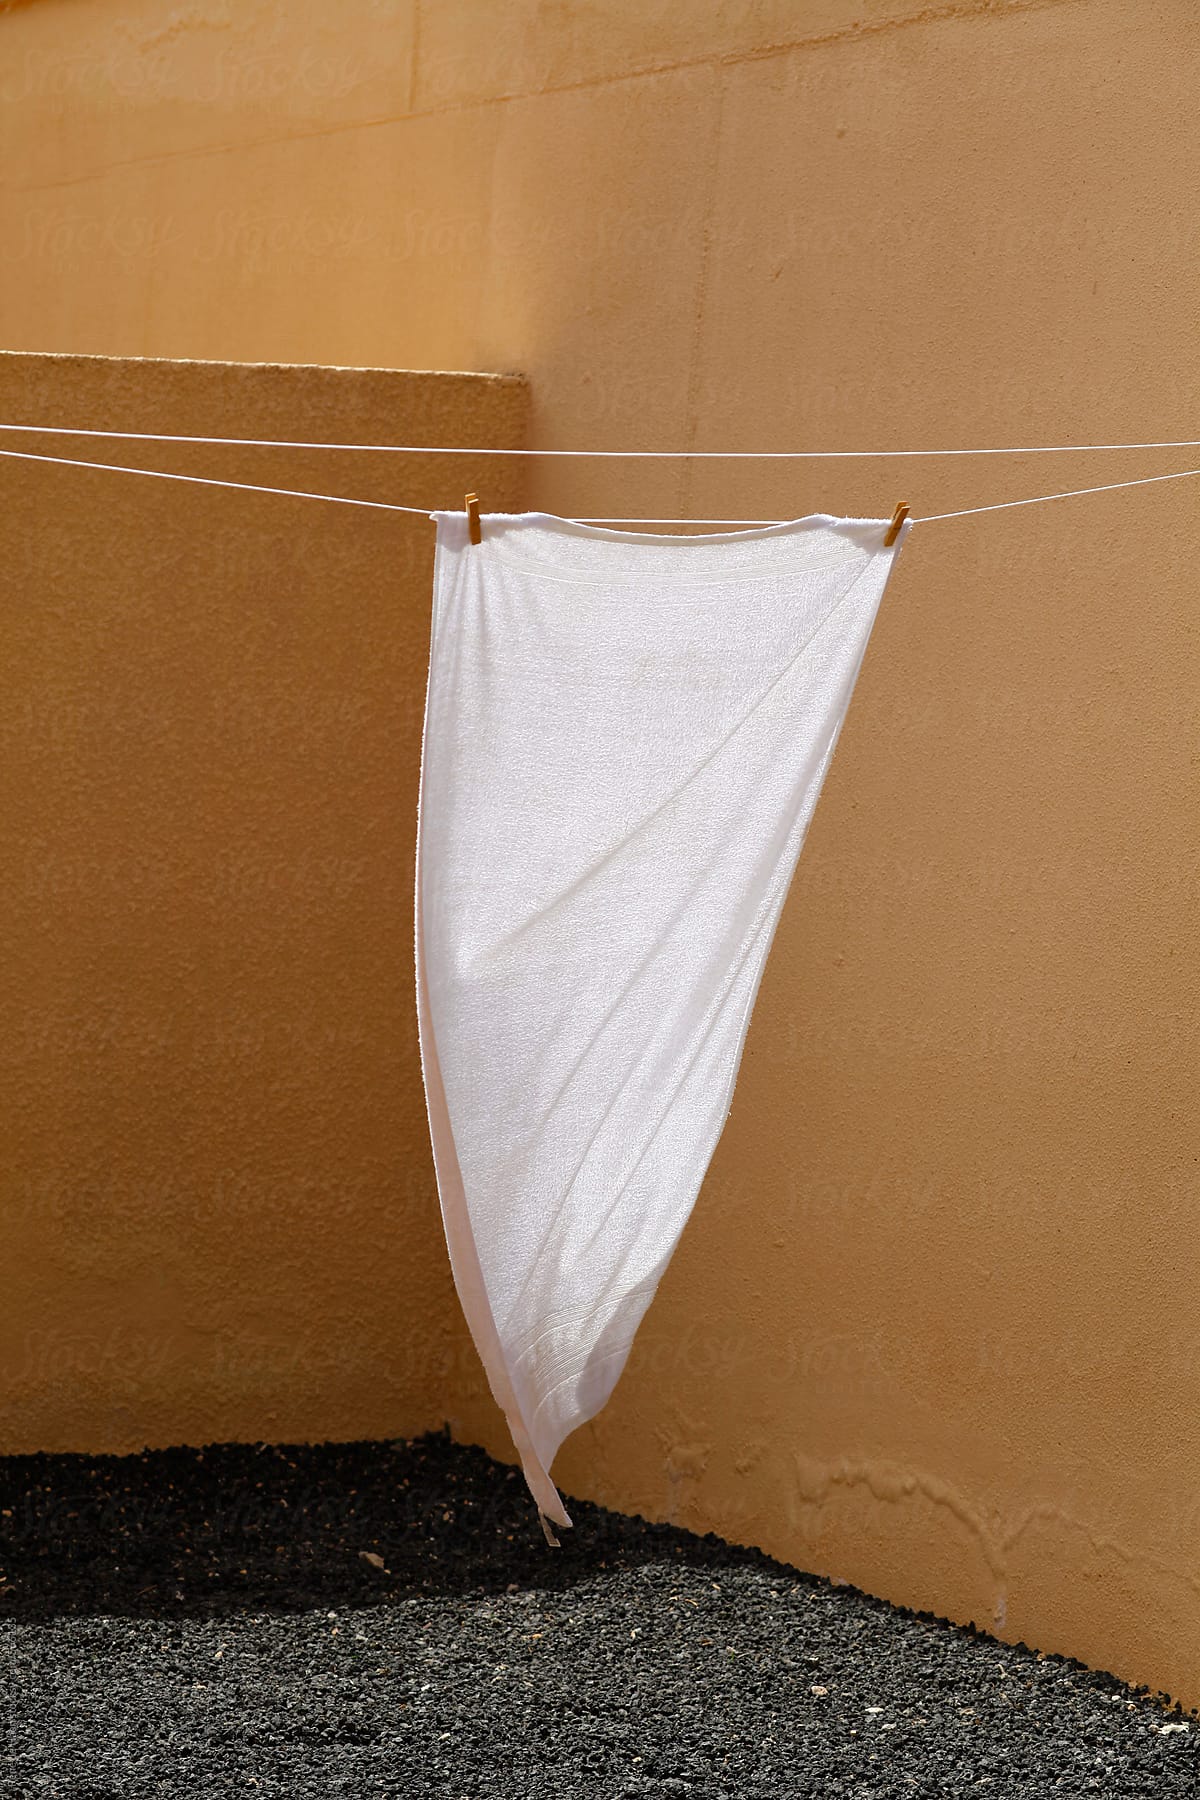 towel on clothesline